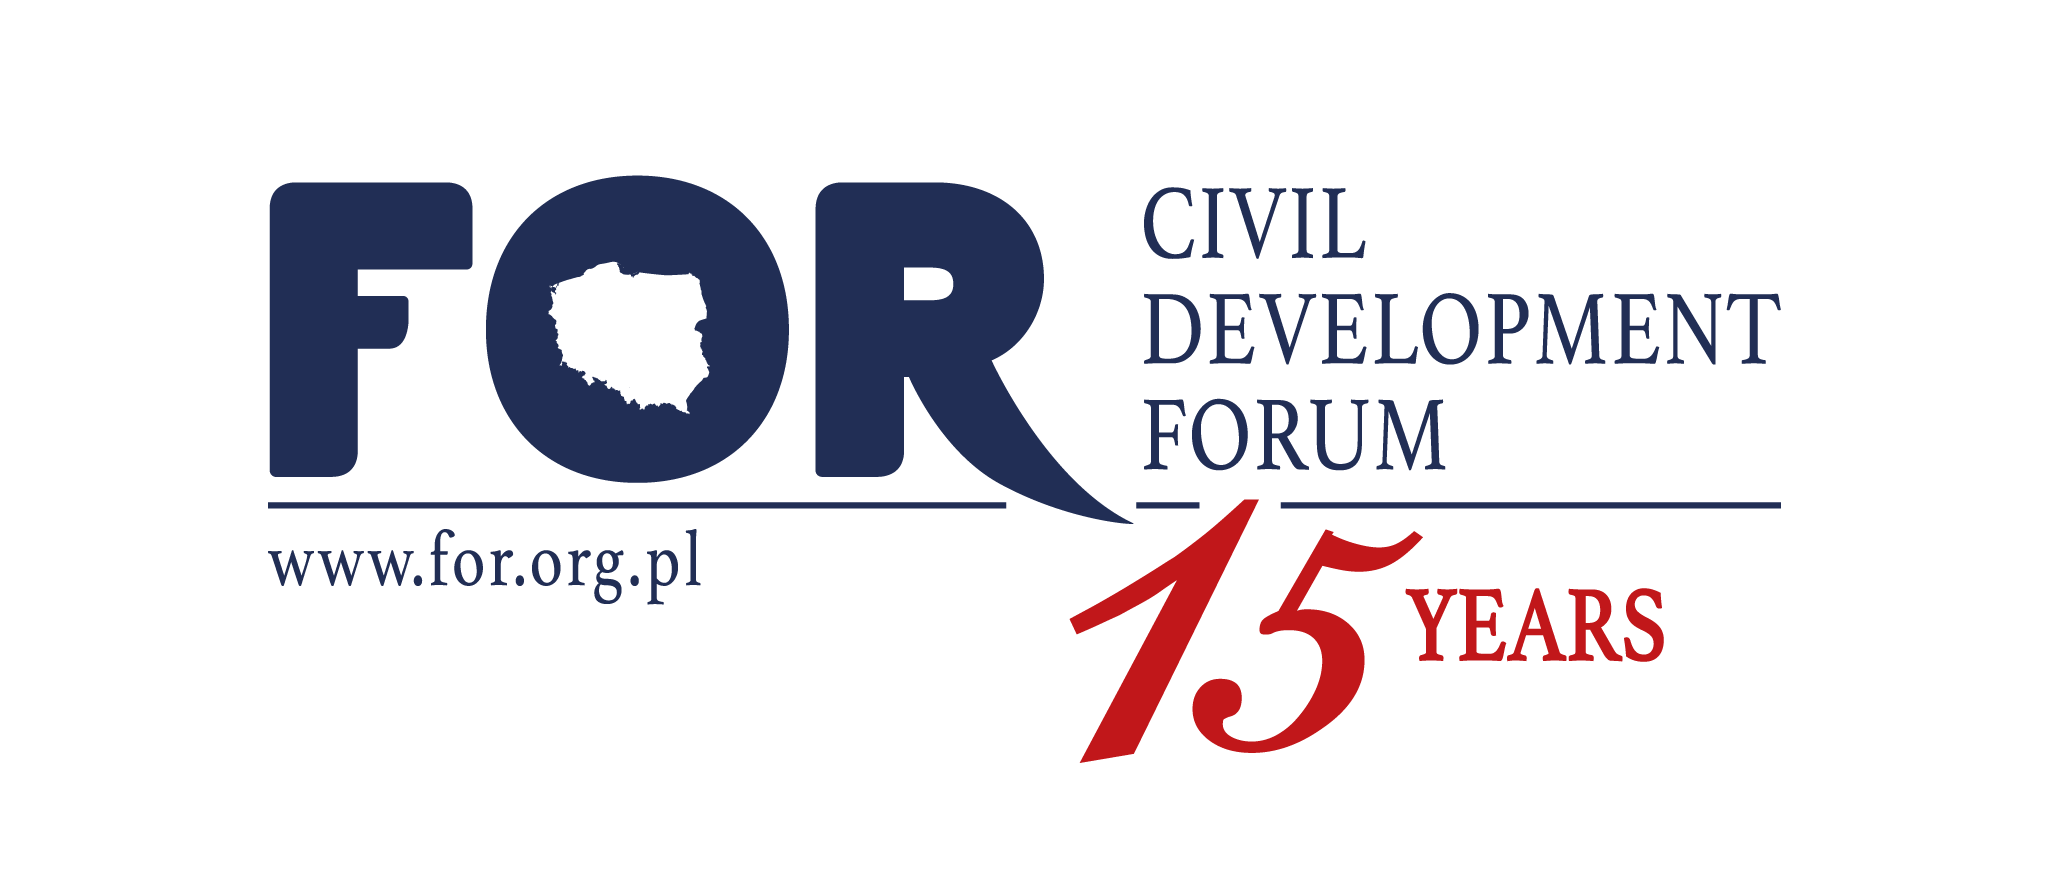 Civil Development Forum 